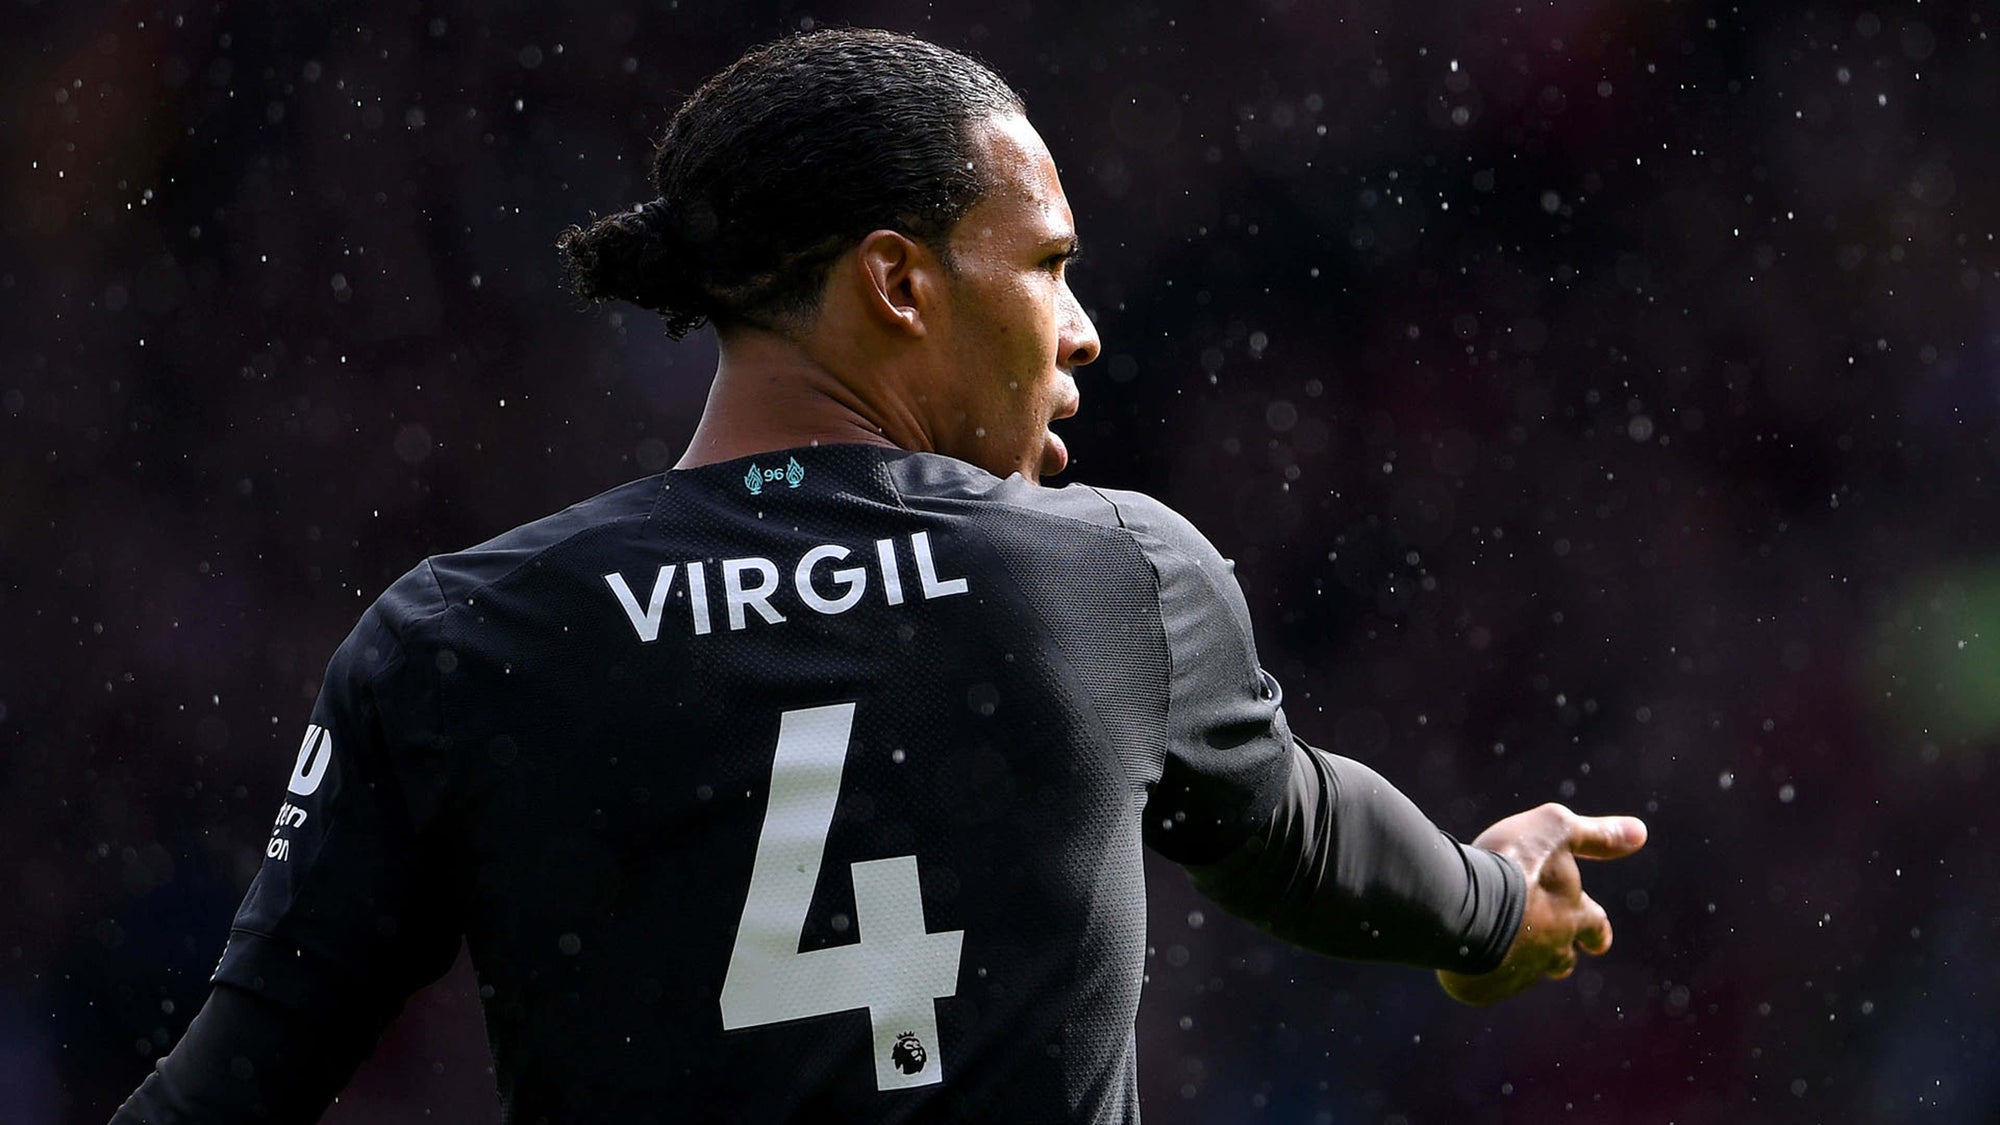 Why Does Virgil Van Dijk Have 'Virgil' On His Shirt?